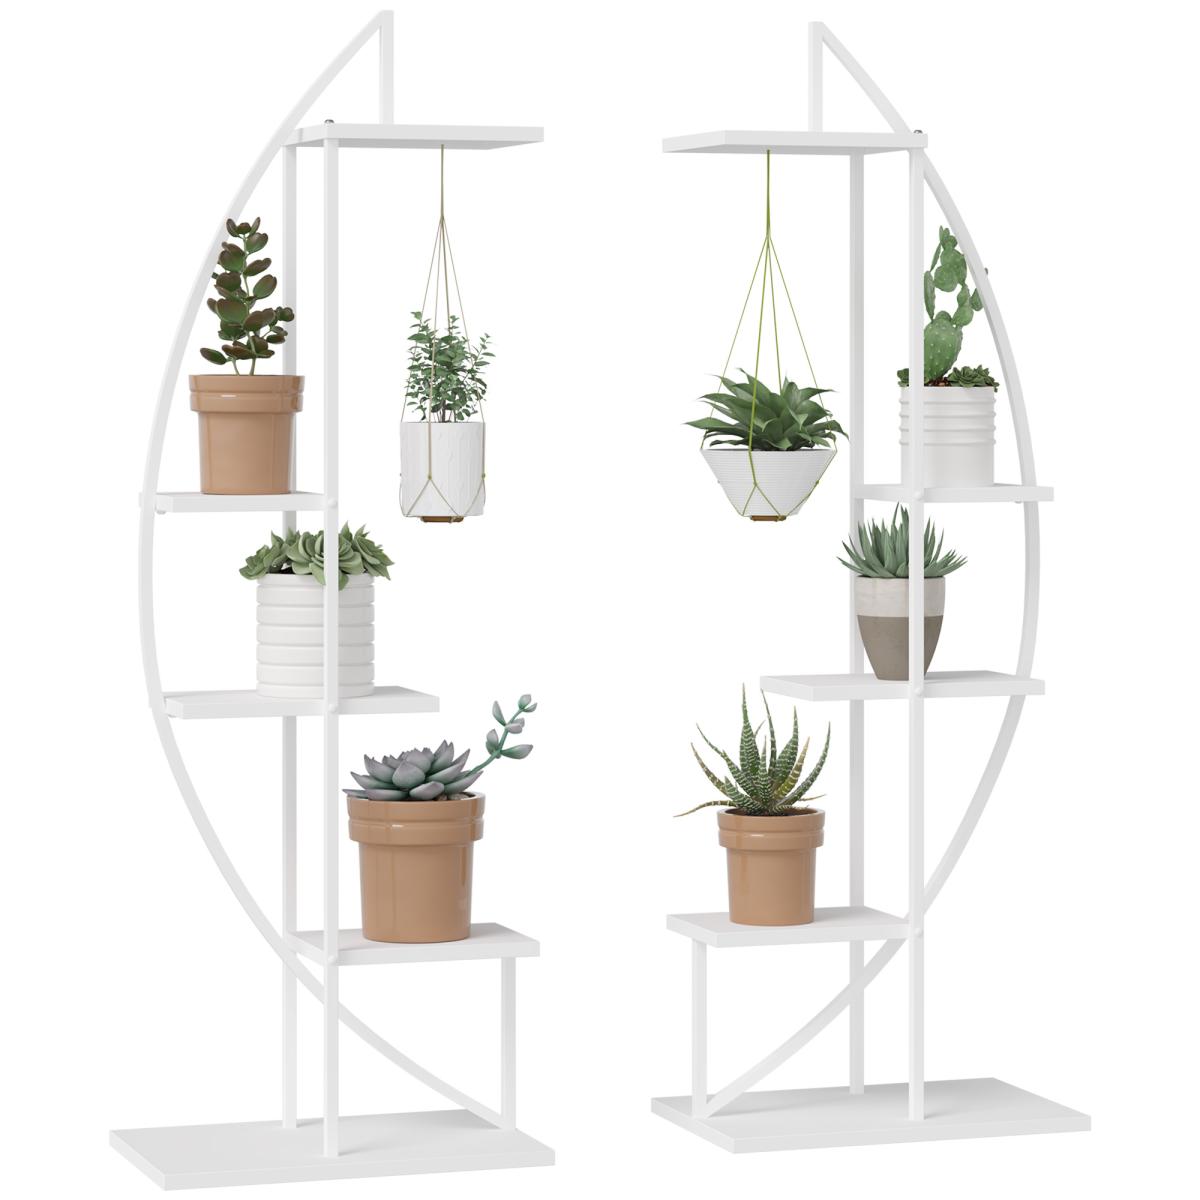 5 Tier Metal Plant Stand with Hangers, Half Moon Shape Flower Pot Display Shelf for Living Room Patio Garden Balcony Decor, White